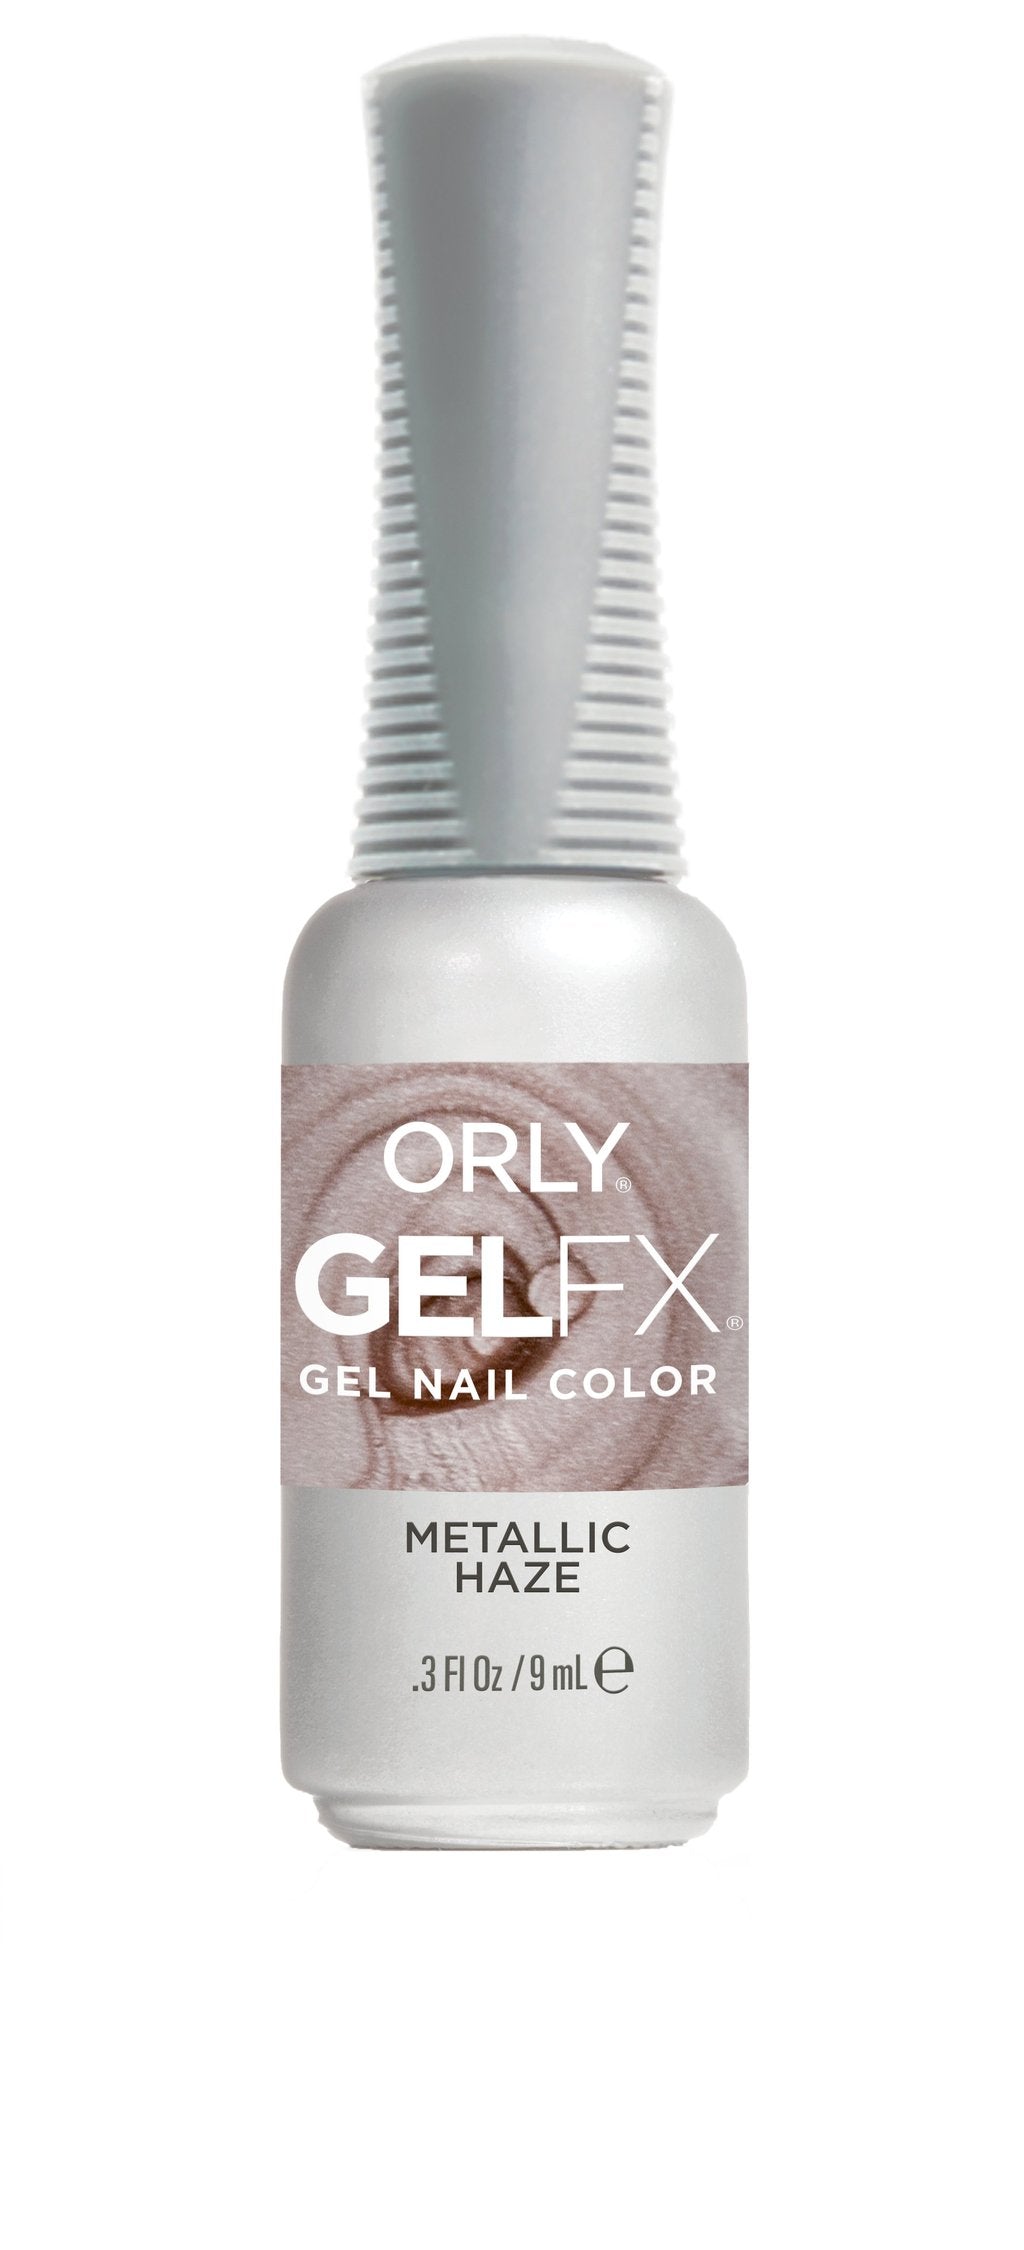 Orly GelFX Metallic Haze .3 fl oz 30974